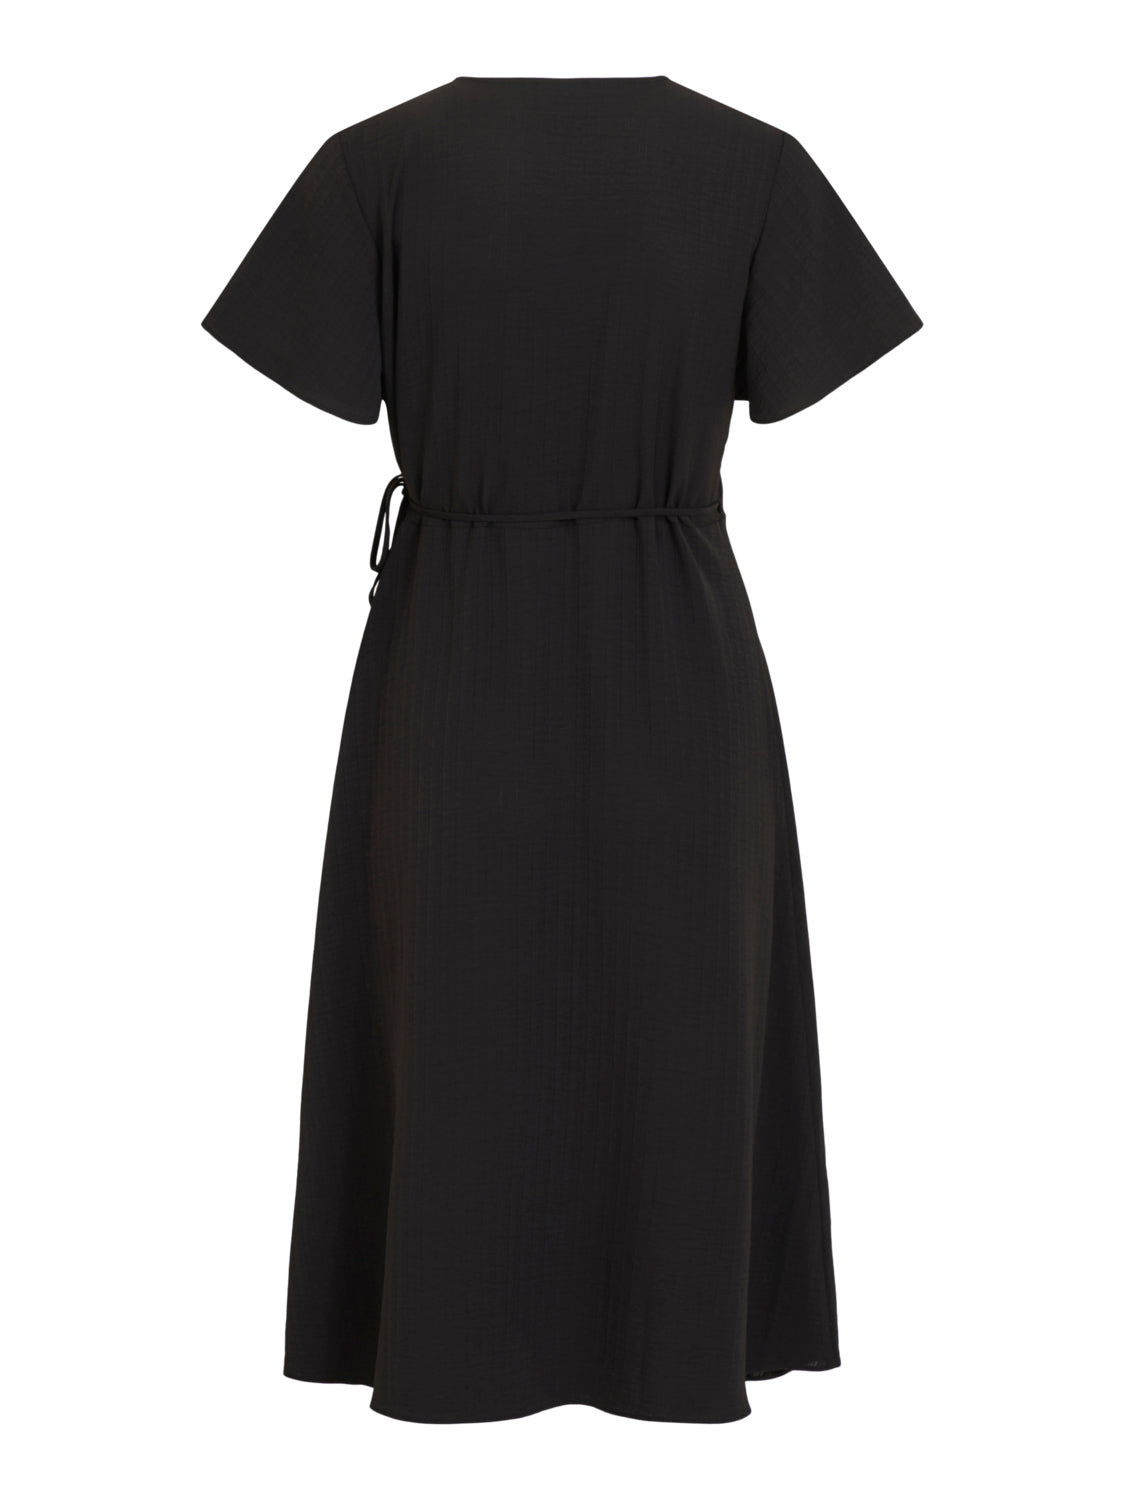 VILOVIE Dress - Black